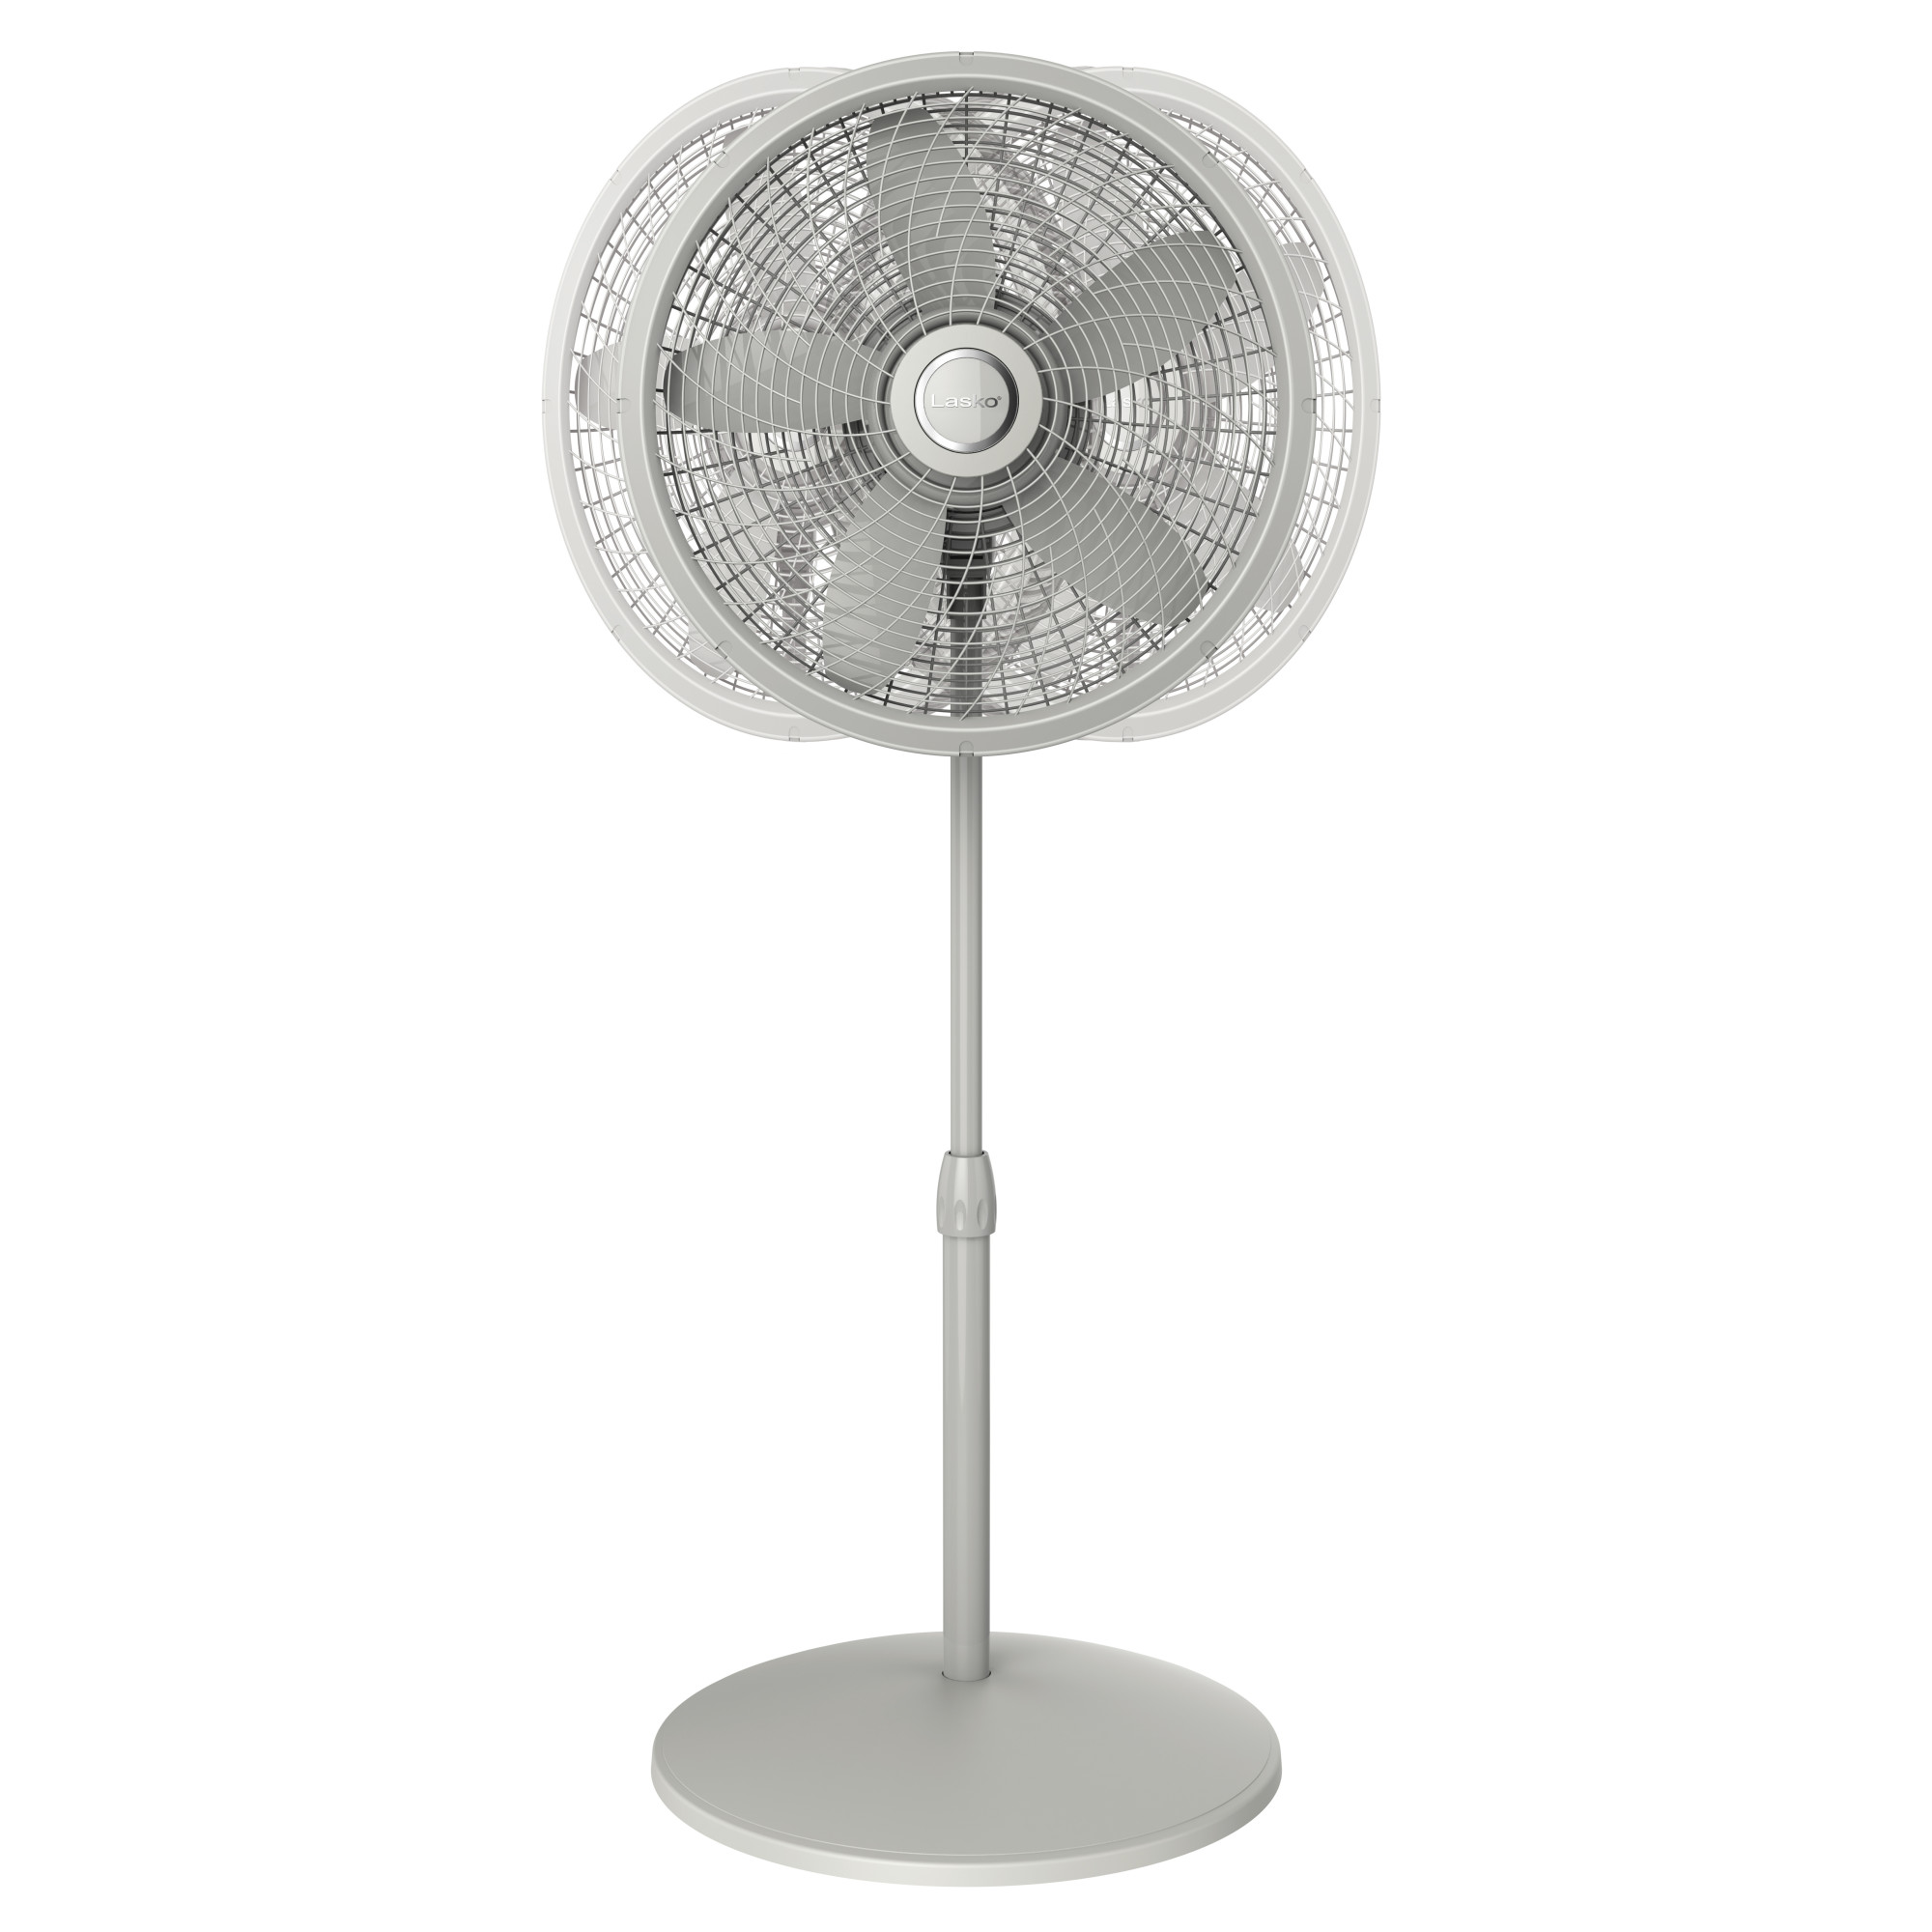 Lasko Cyclone 18" Adjustable Large Room Pedestal Fan, 3 Speeds, 54.5" H, Gray, S18902, New - image 5 of 8